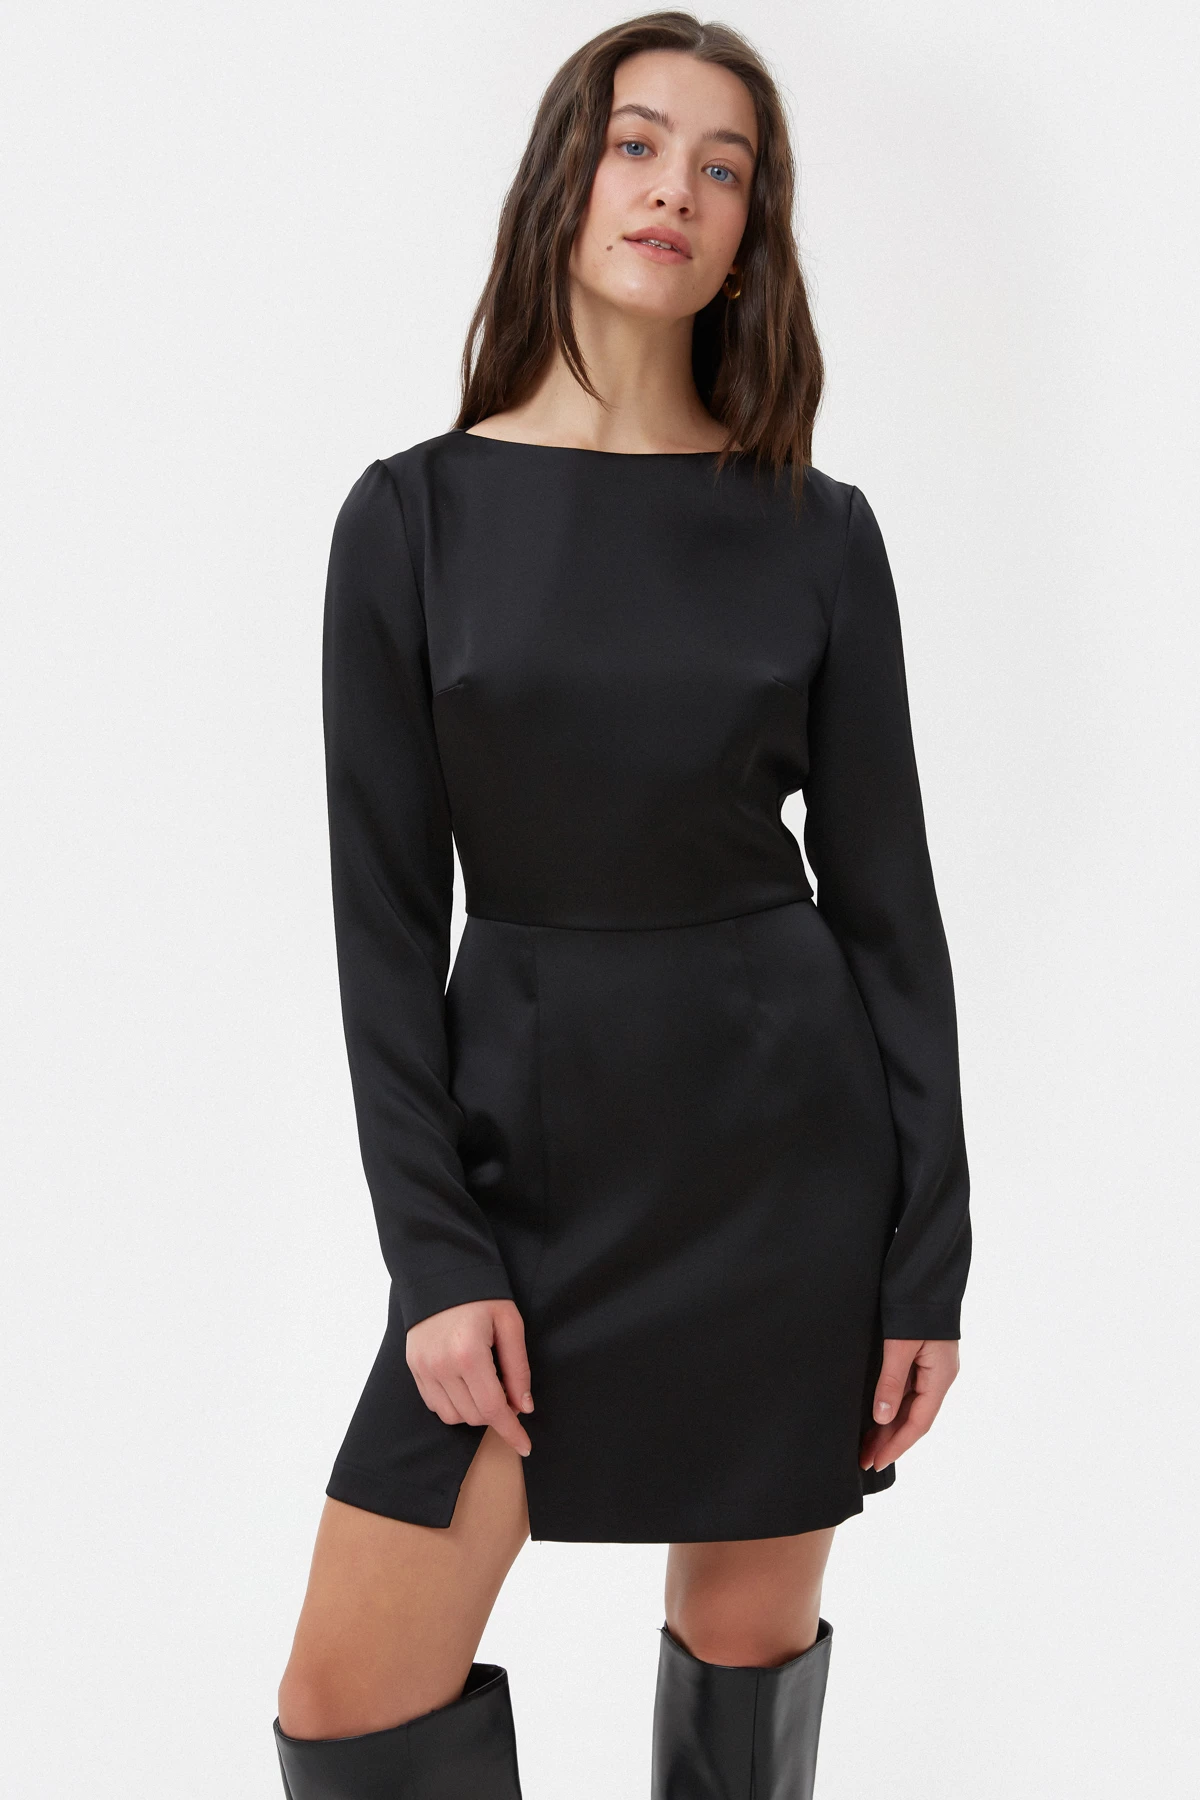 Short black satin dress with long sleeves , photo 1